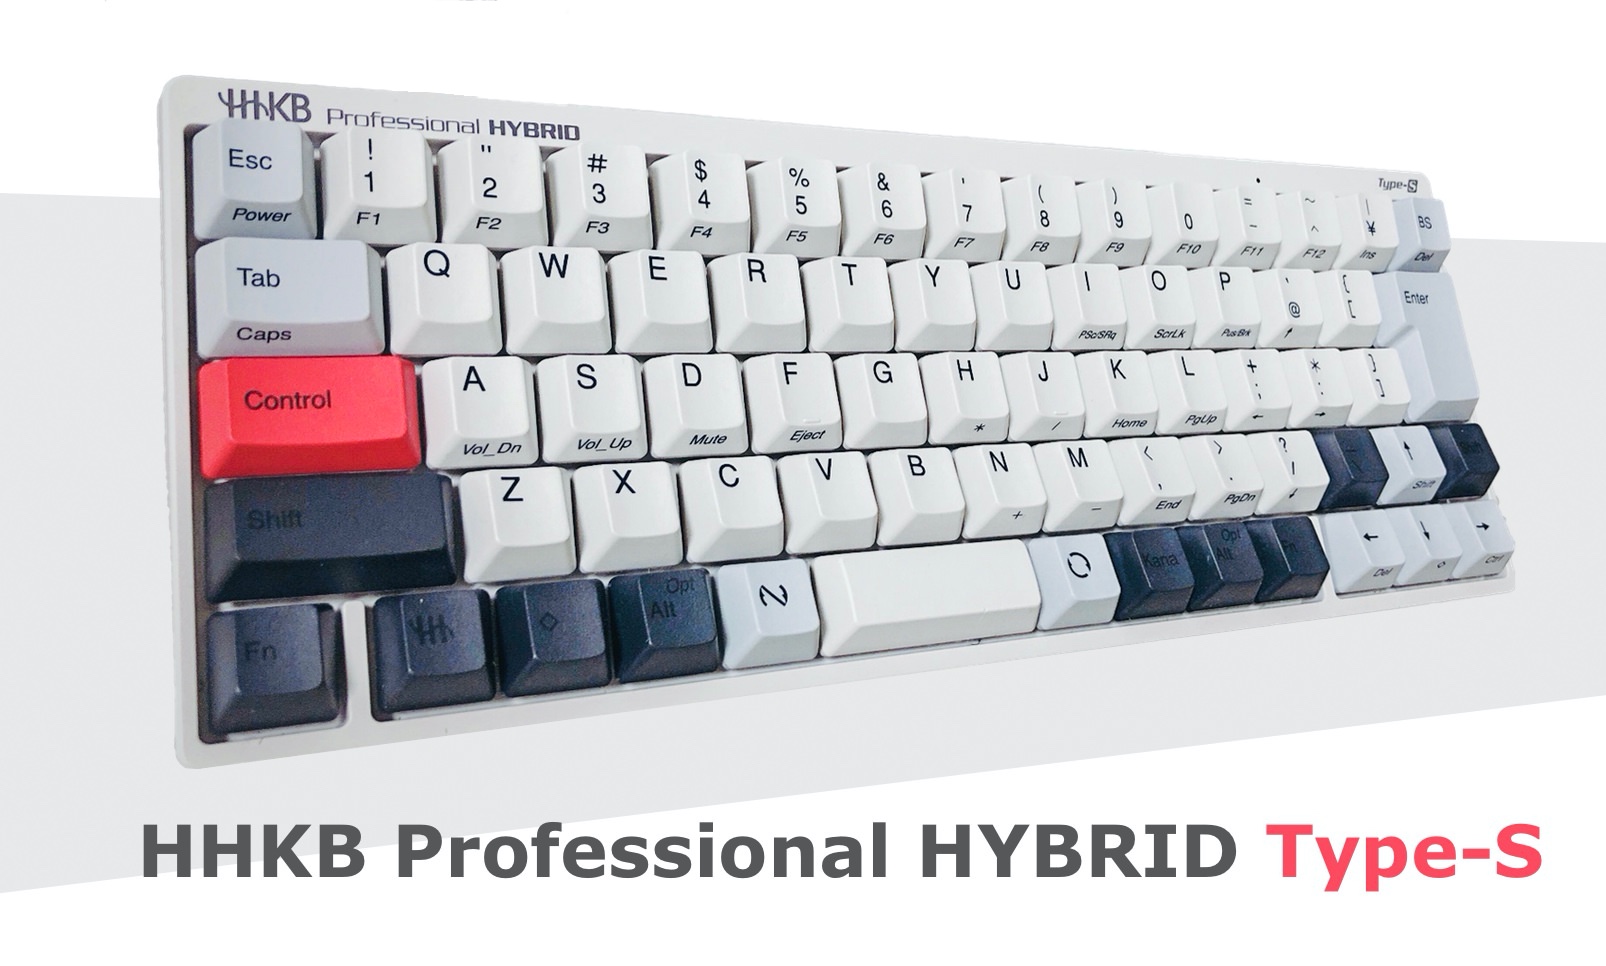 HHKB Professional HYBRID Type-S 墨 US配列 - www.bjmpmpc.com